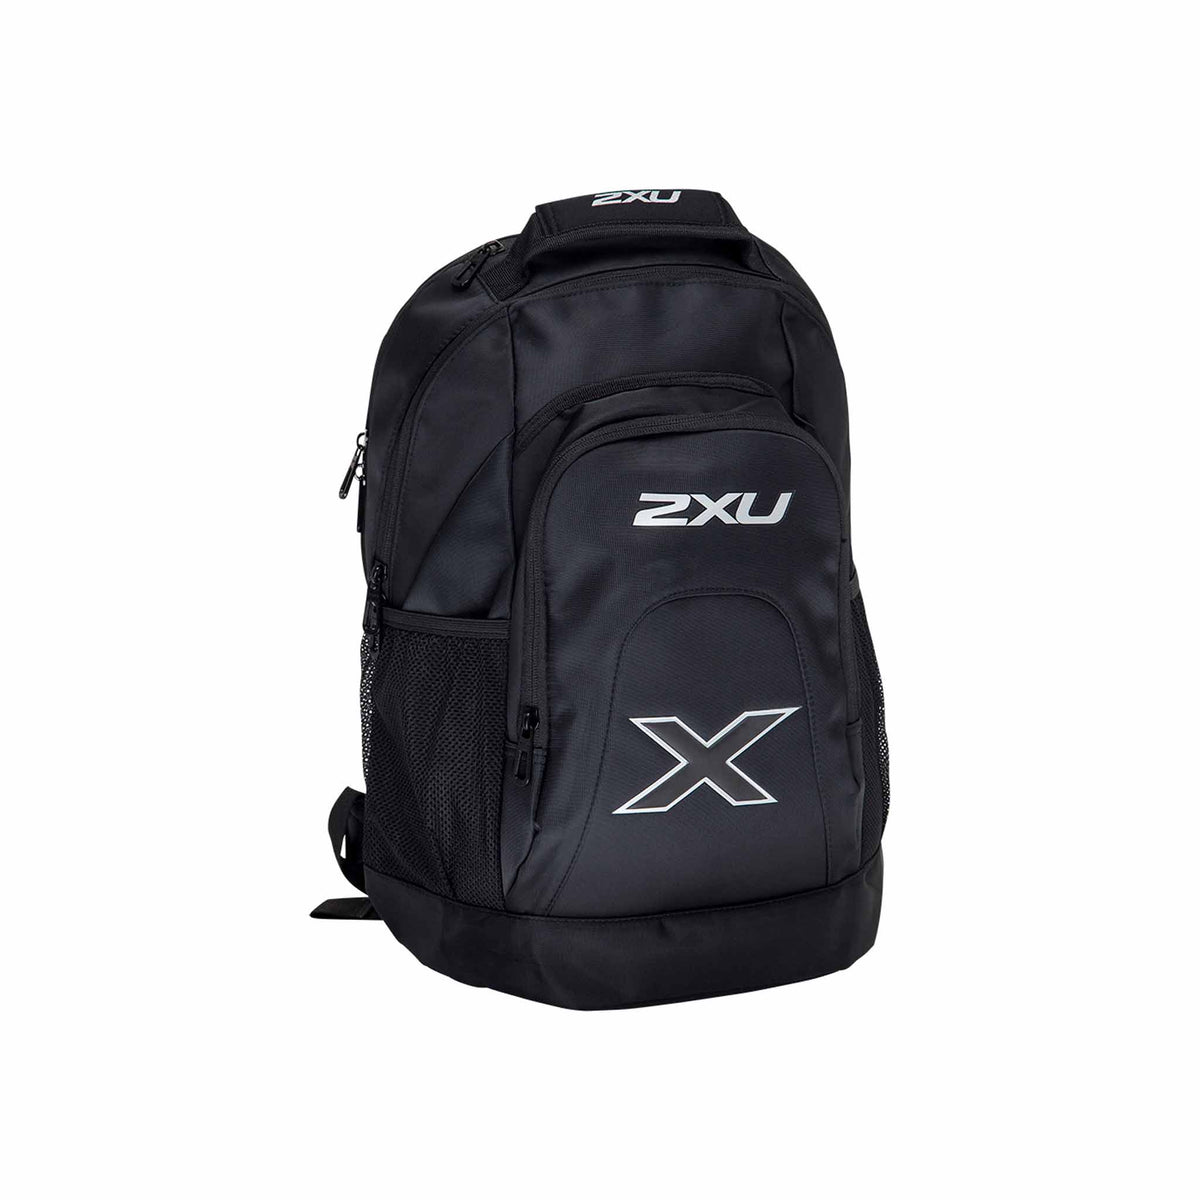 2XU Distance Backpack sac à dos sport